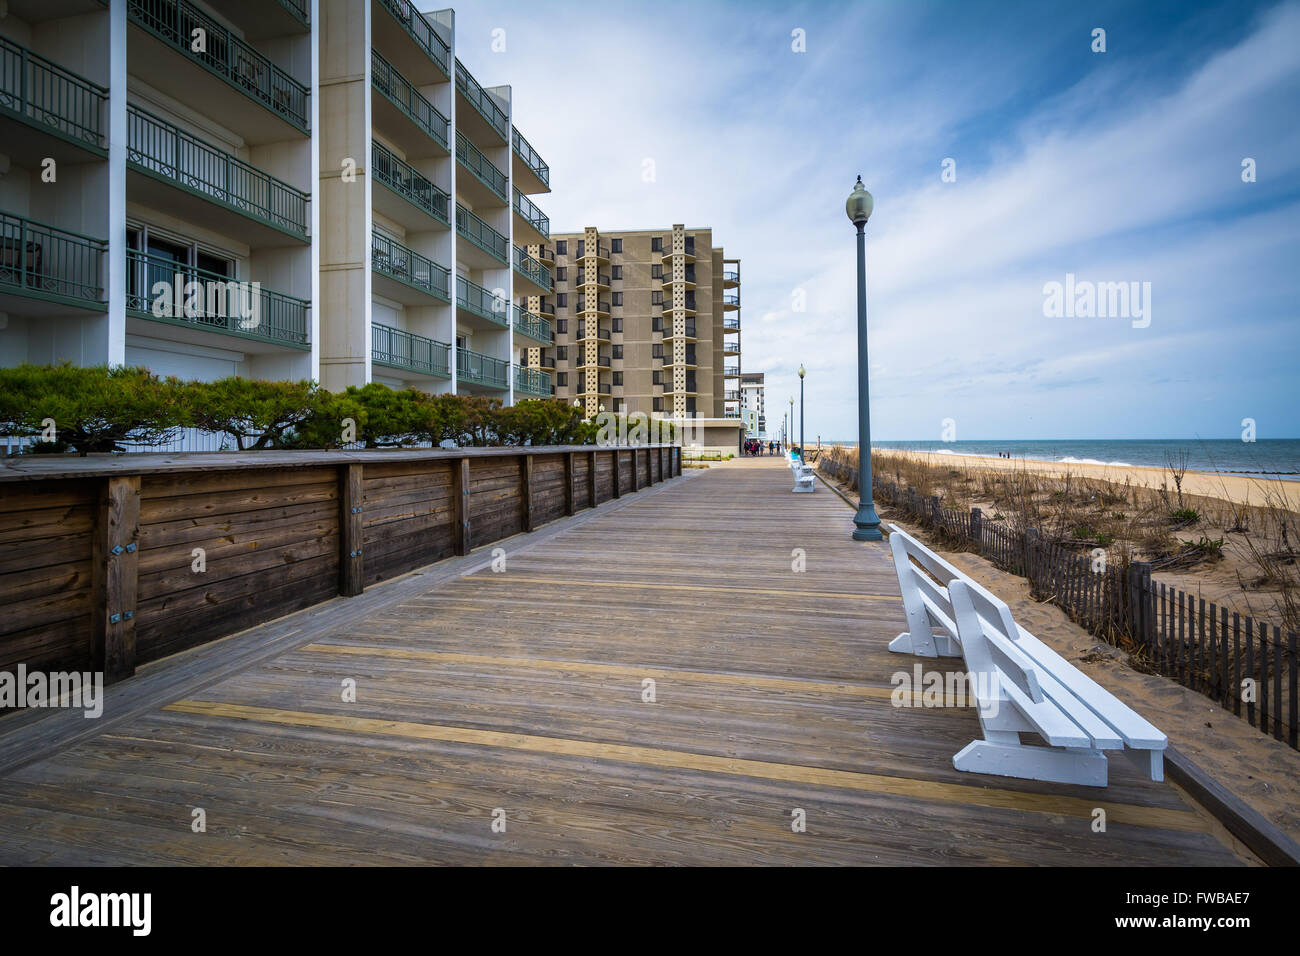 The boardwalk in Rehoboth Beach, Delaware. Stock Photo